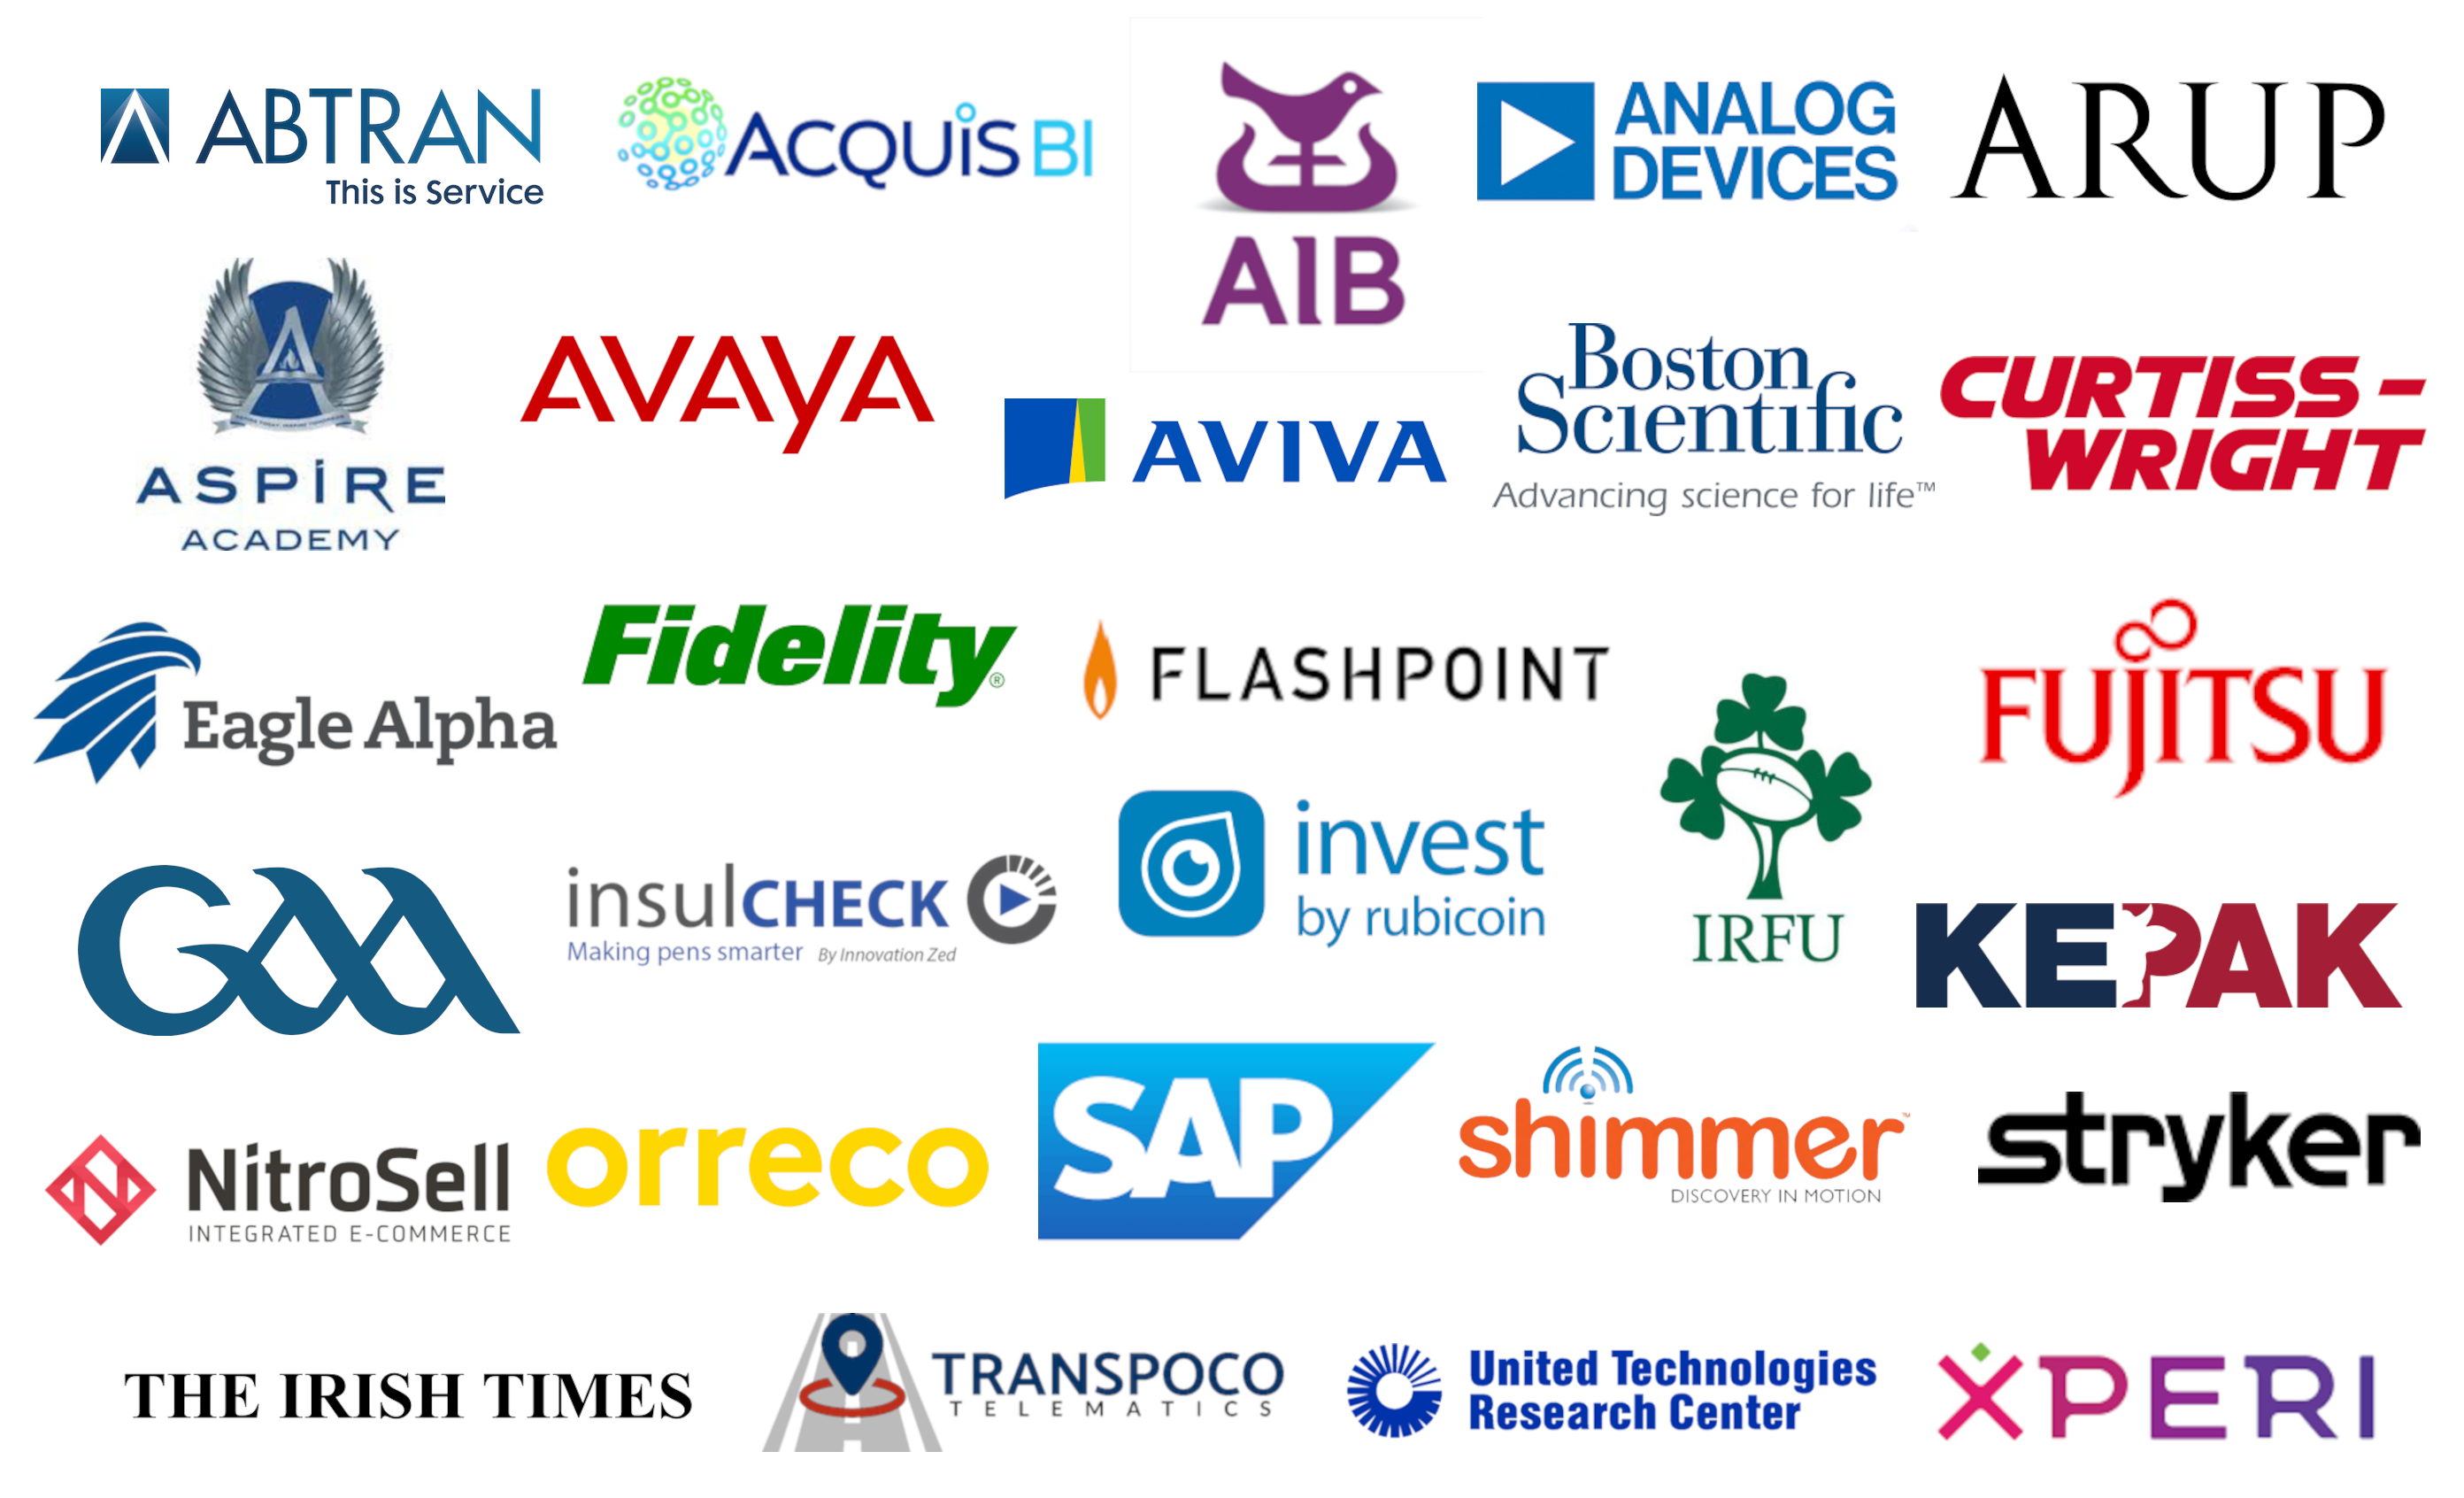 Industry Partners' logos